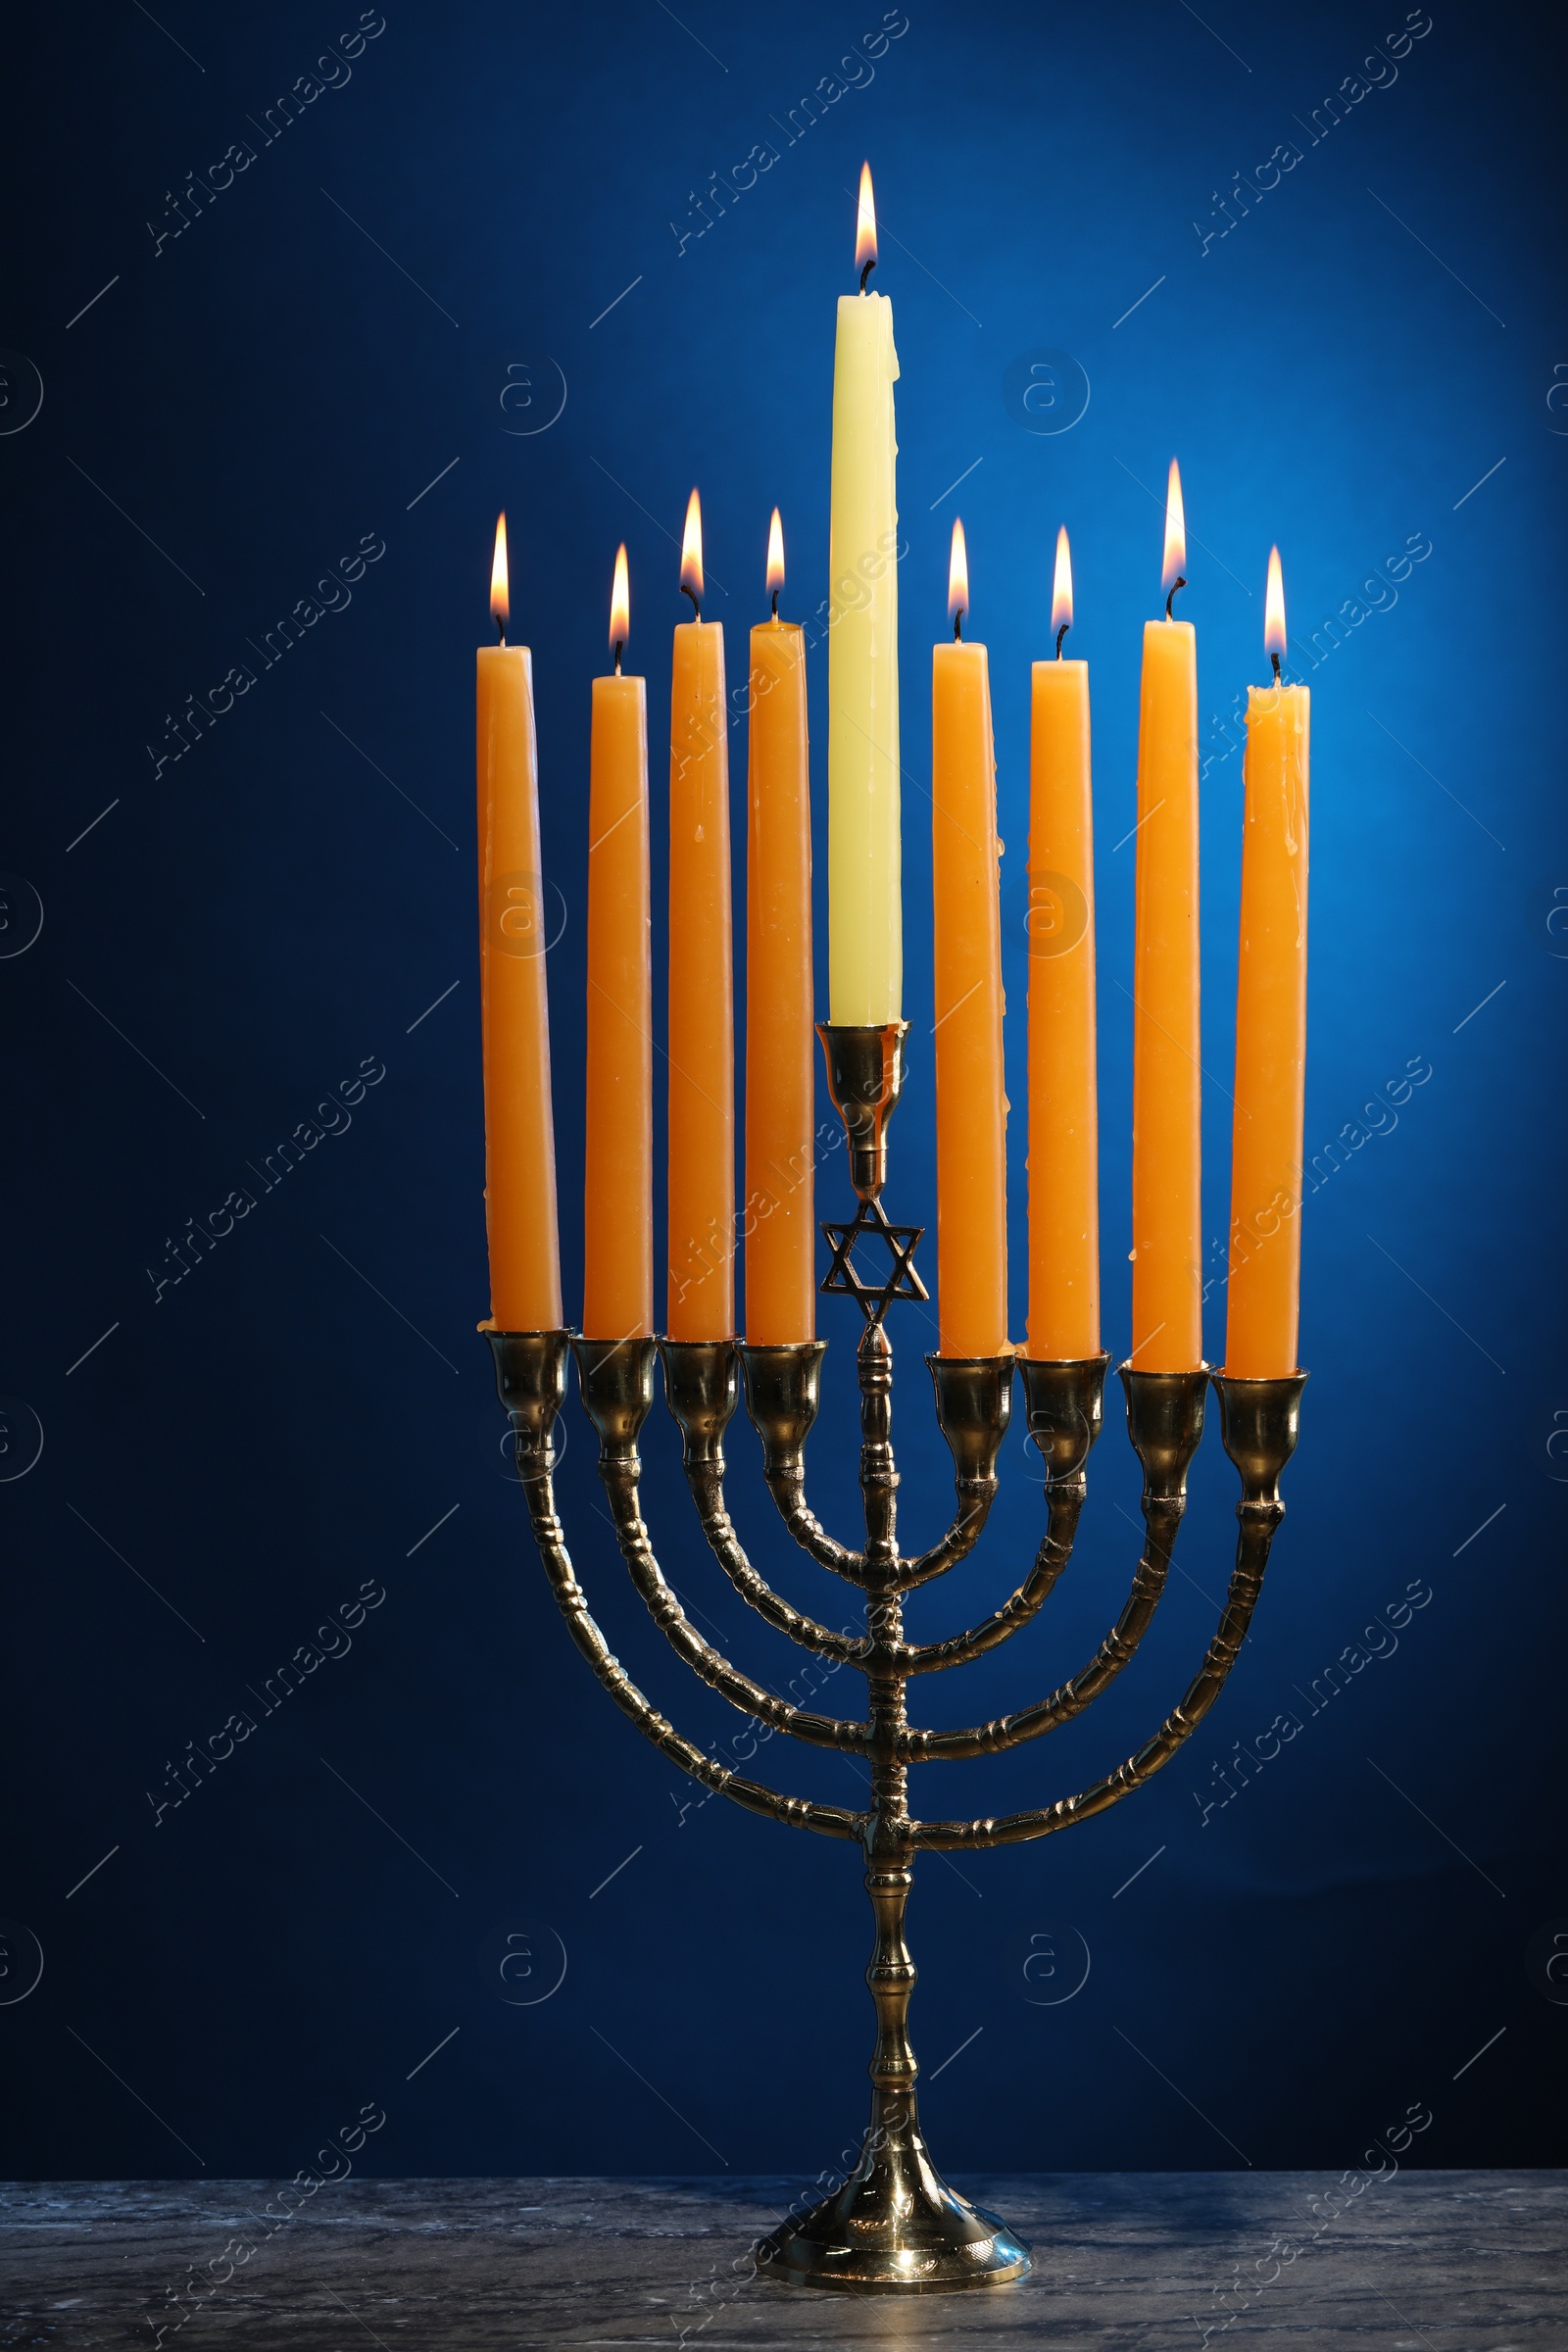 Photo of Hanukkah celebration. Menorah with burning candles on table against blue background